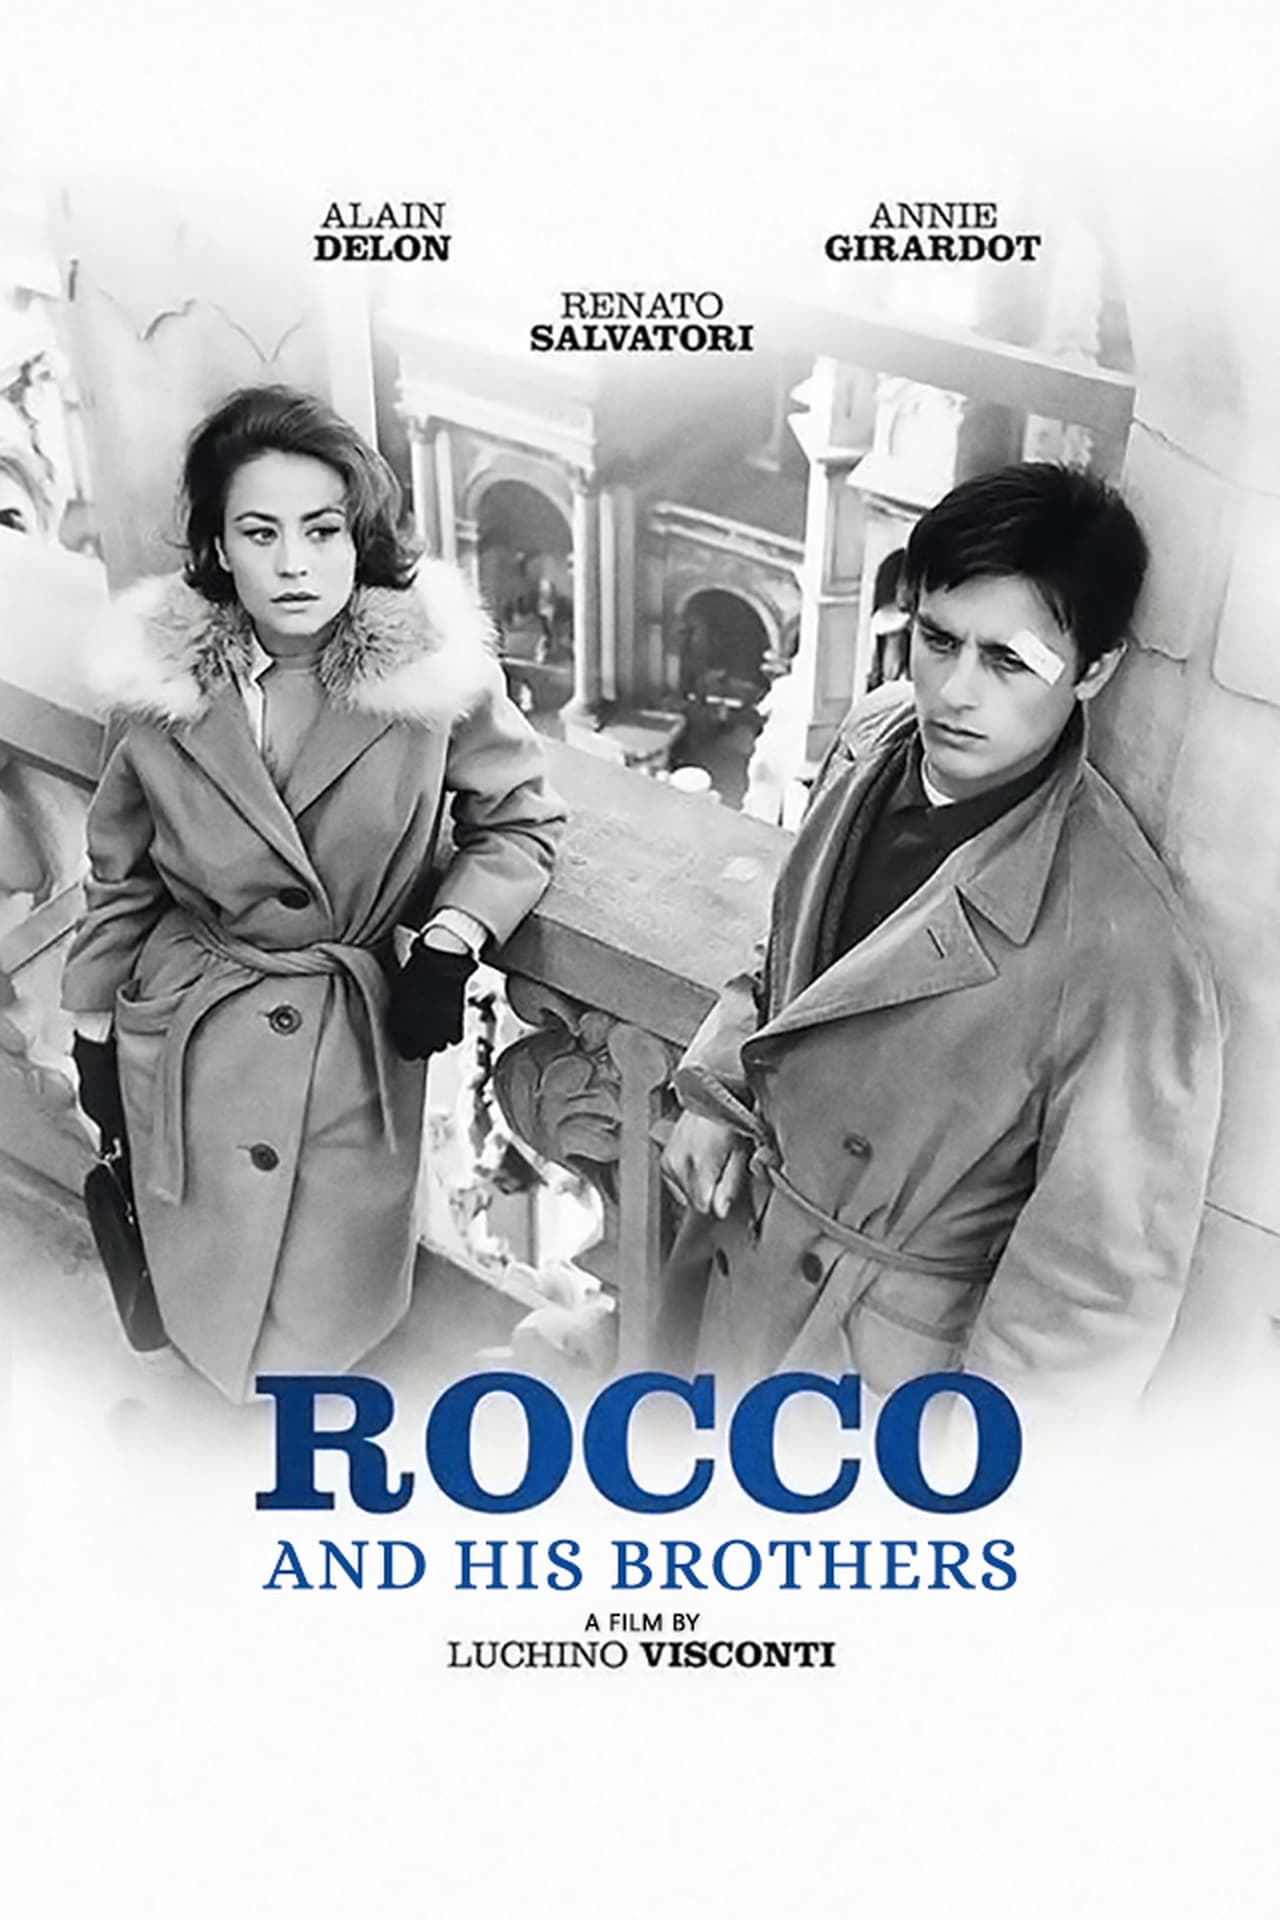 EN - Rocco And His Brothers (1960) - ALAIN DELON